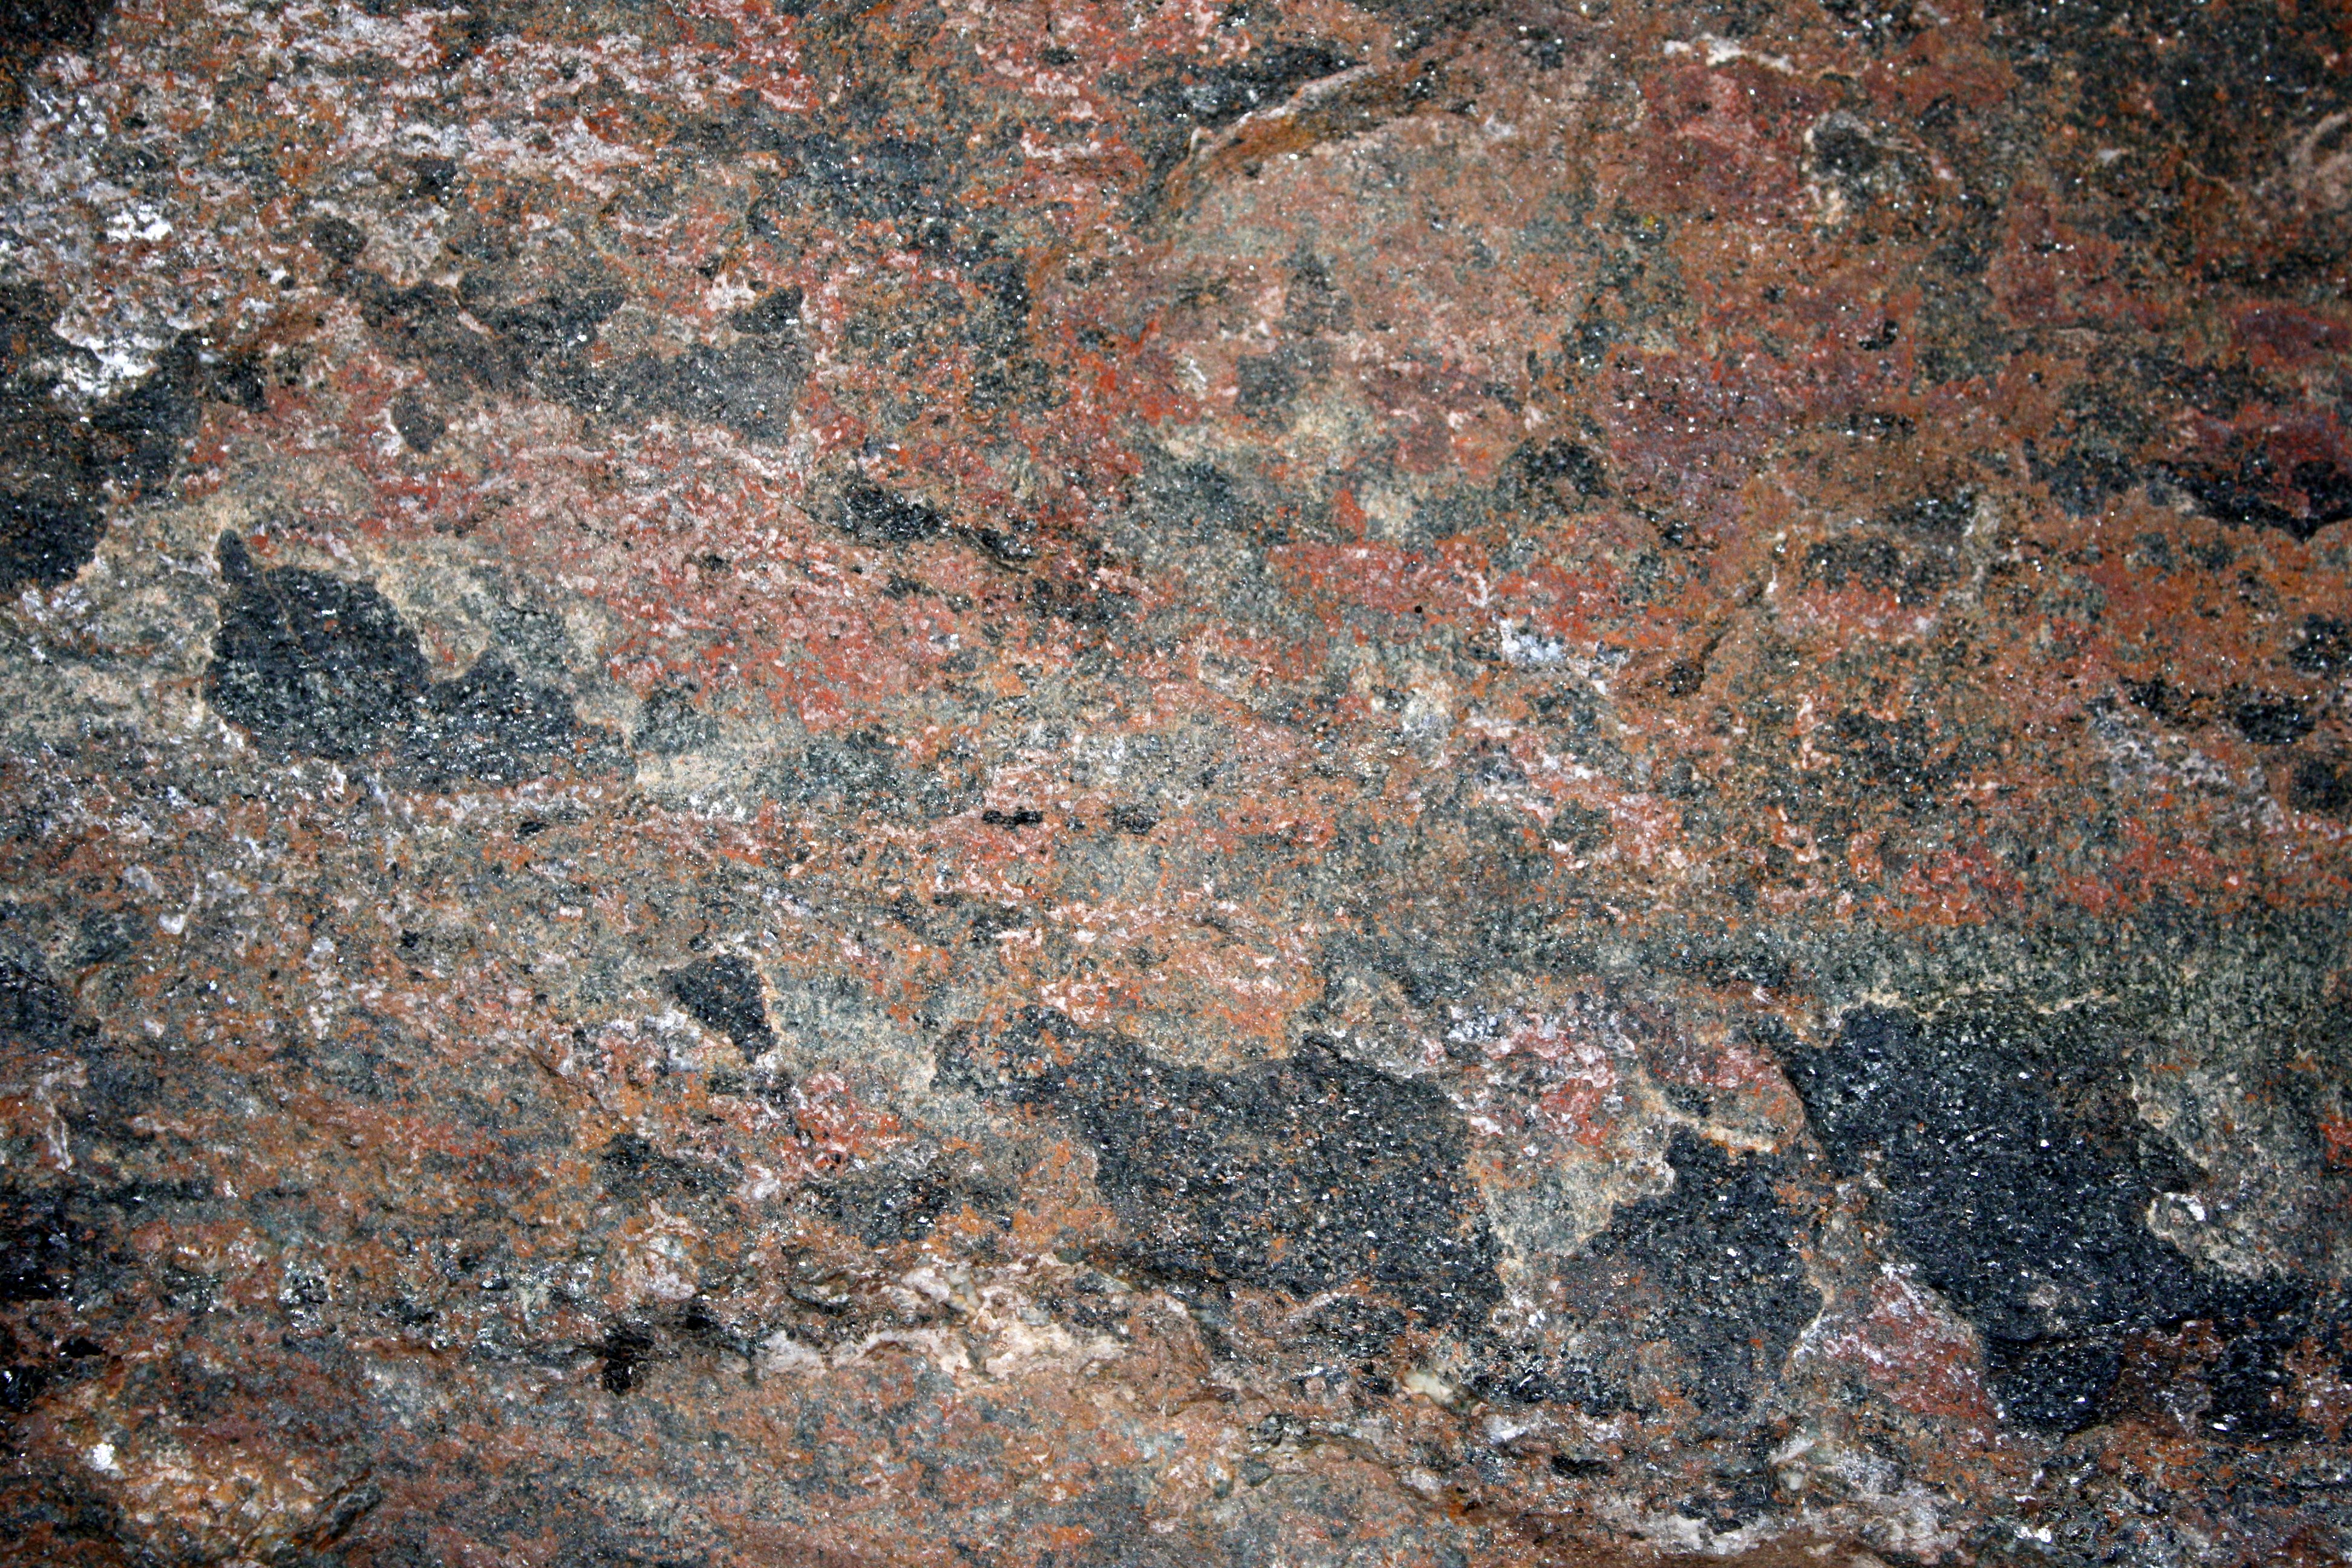 Mica Schist Rock Texture With Red Feldspar Black Biotite And White